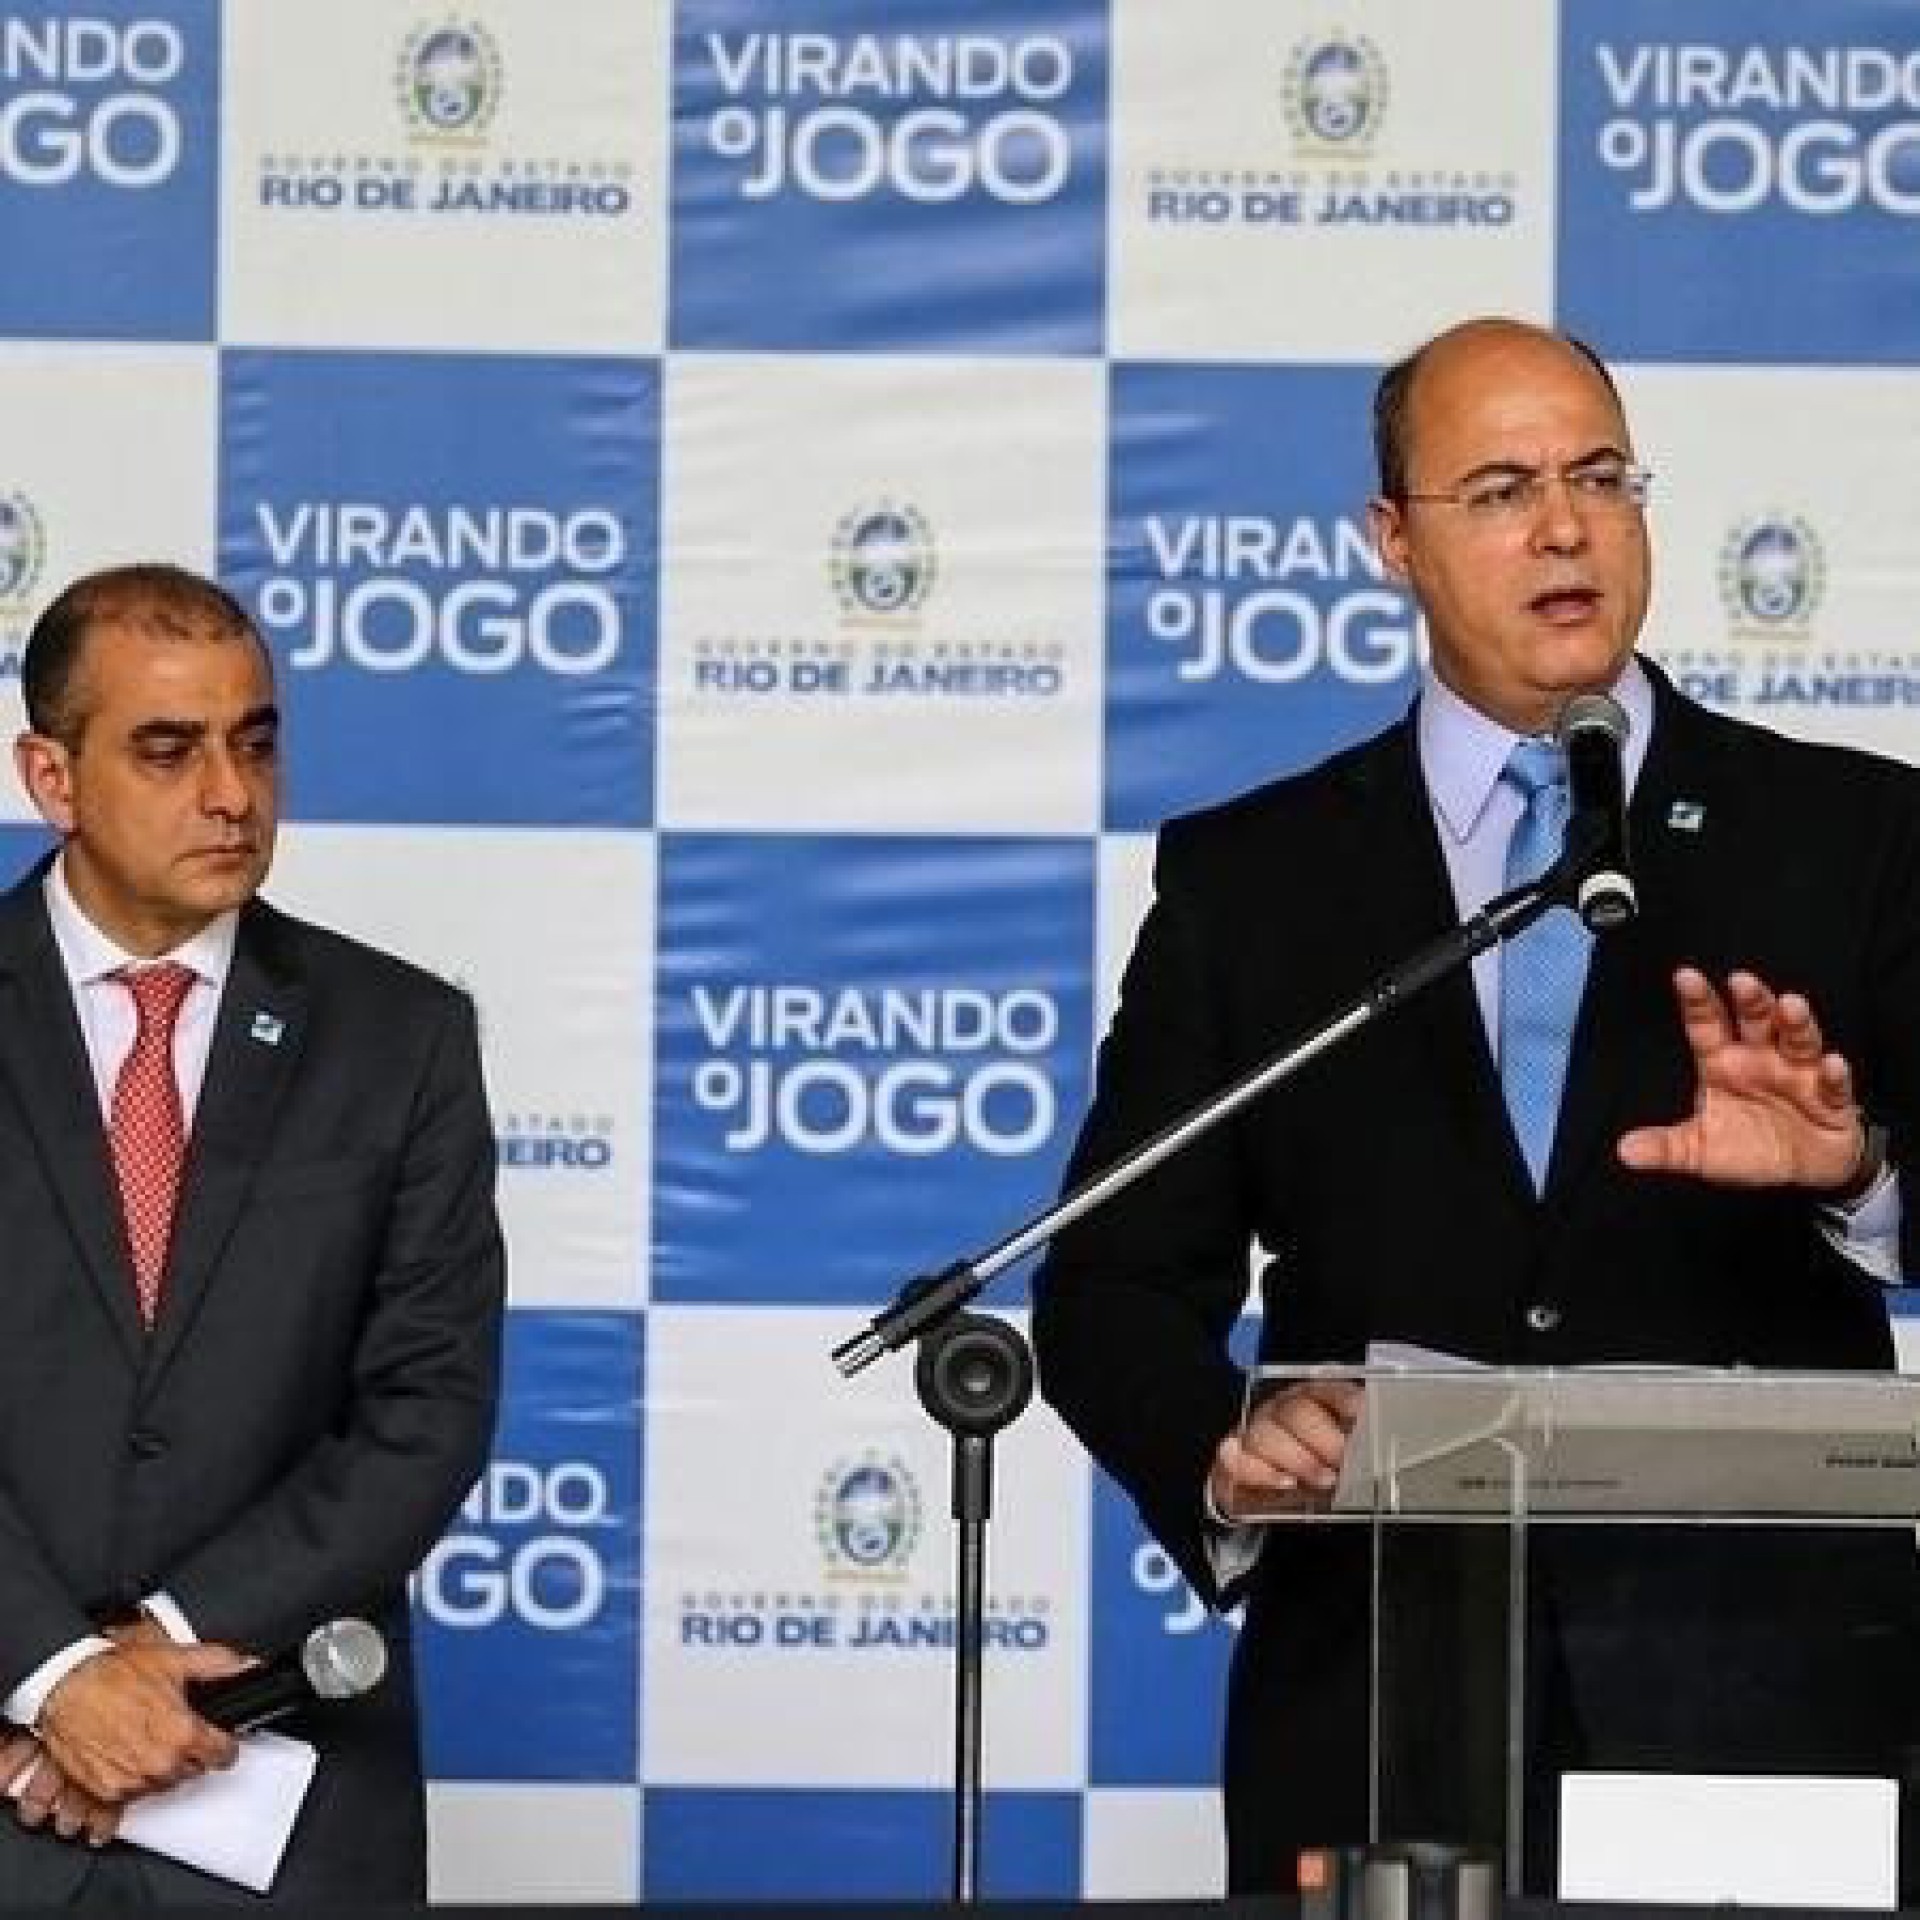 Edmar Santos alongside Wilson Witzel - Carlos Magno/ Disclosure/ Government of Rio